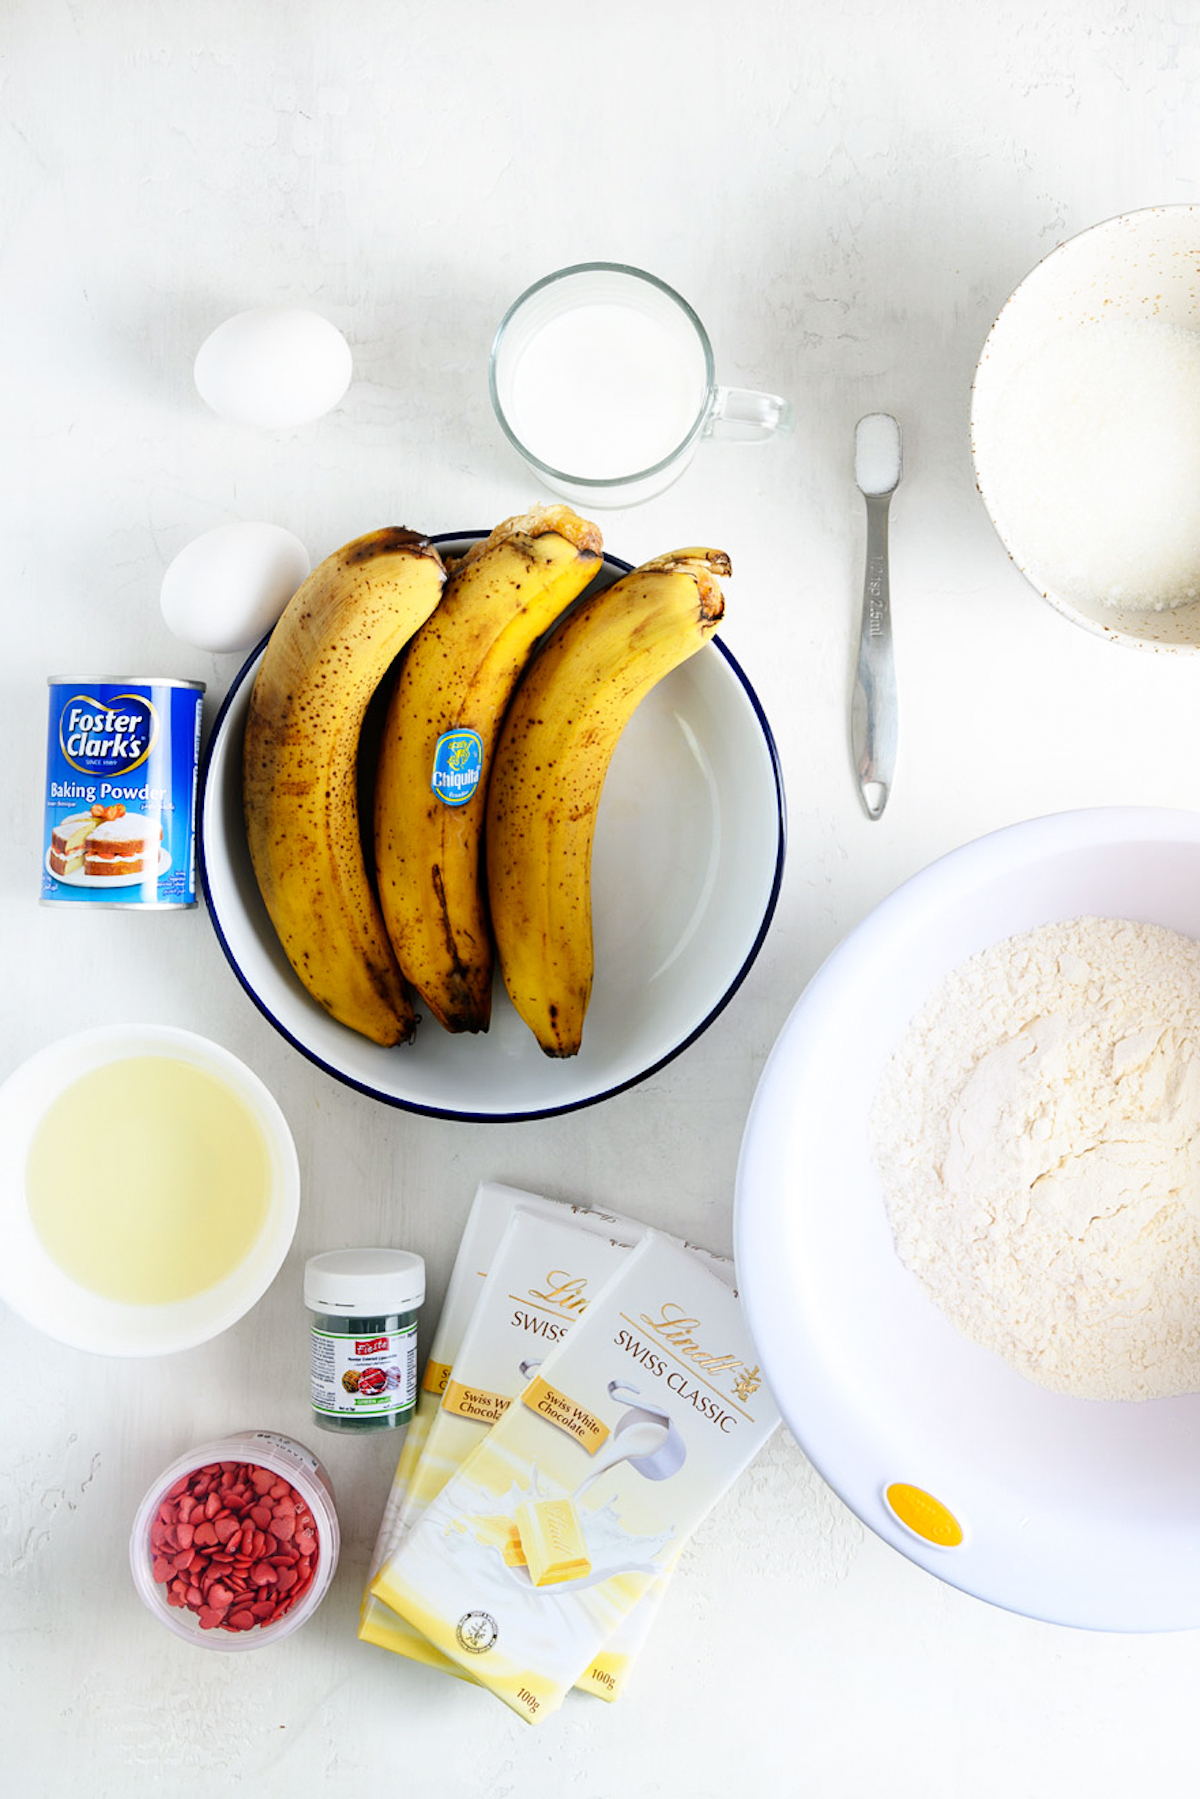 From top left, ingredients for banana cake recipe: Eggs, milk, salt, sugar, baking powder, bananas, flour, vegetable oil, sprinkles, food coloring, white chocolate.